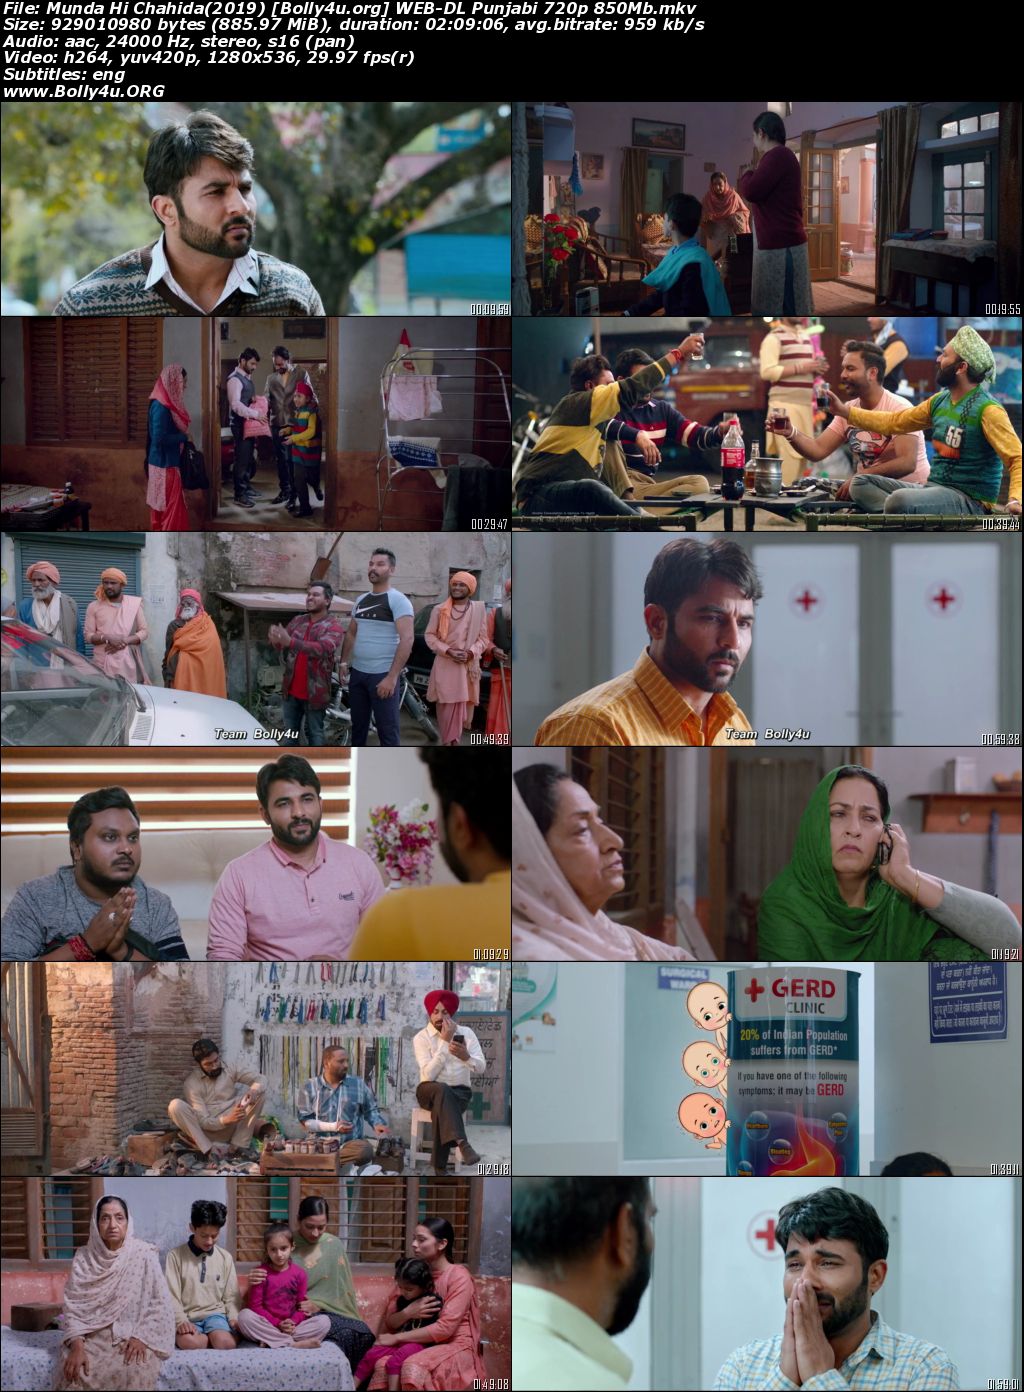 Munda Hi Chahida 2019 WEB-DL 850MB Punjabi Movie Download 720p